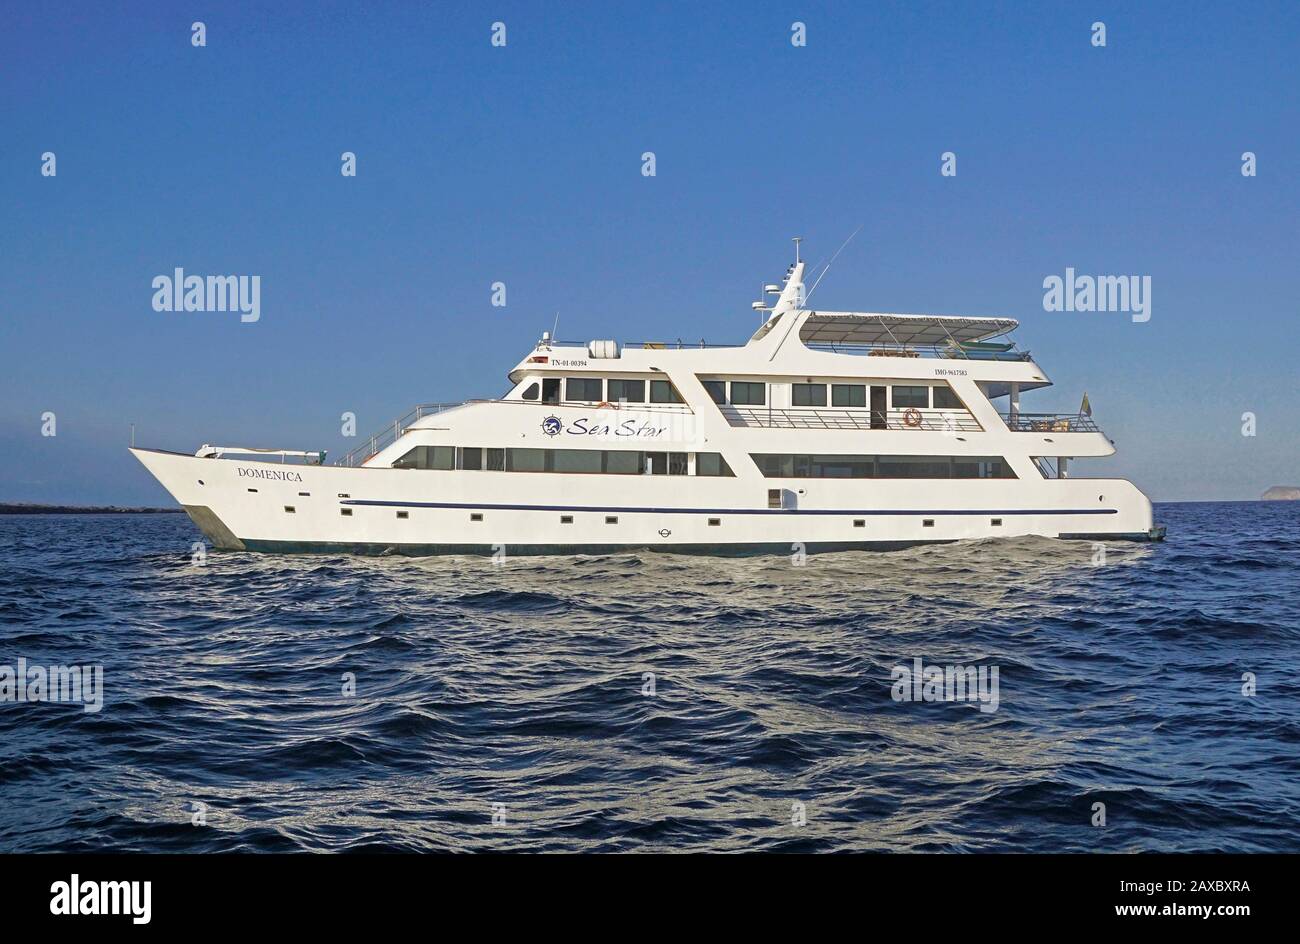 Galapagos Islands 16 passenger yacht Sea Star Journey. Stock Photo